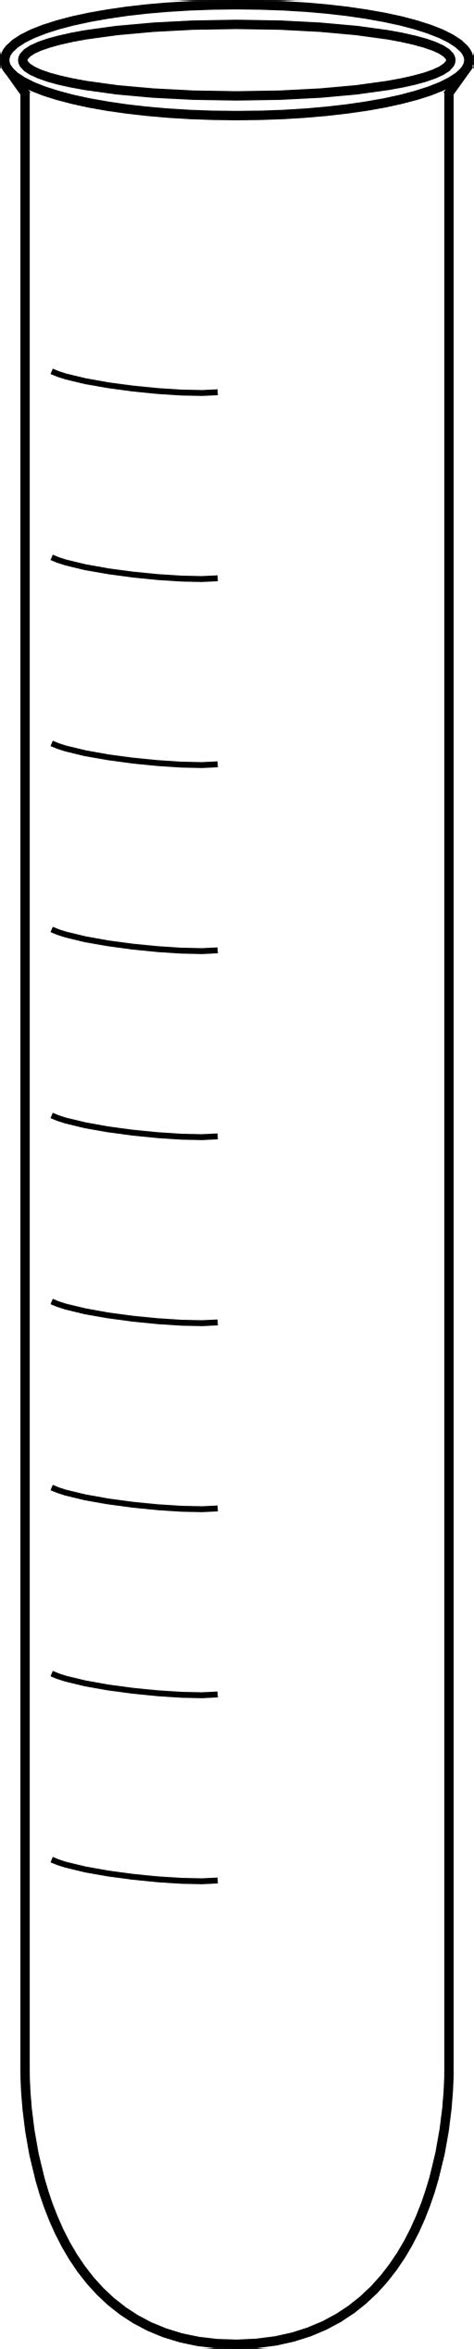 test tube diagram clipart